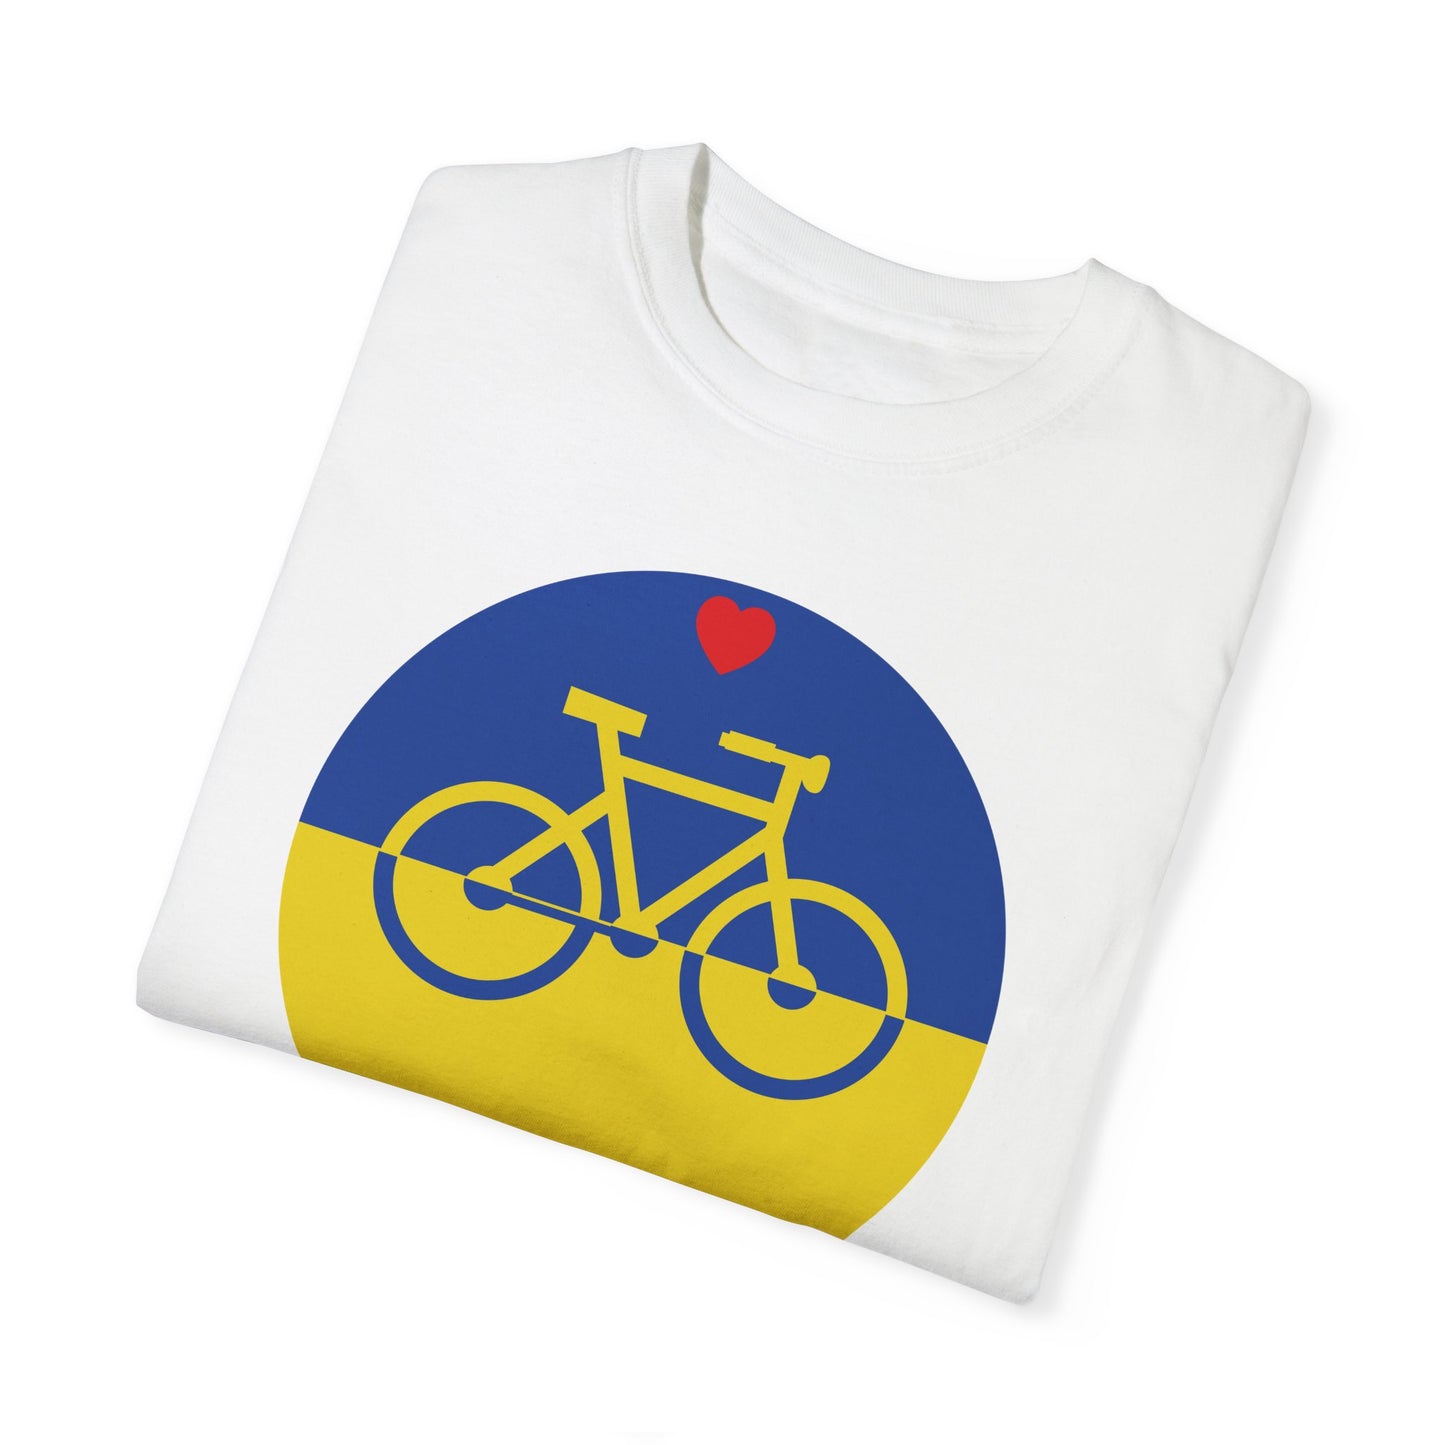 Bikes4Ukraine T-shirt - Design by Povl Lystrup Thomsen